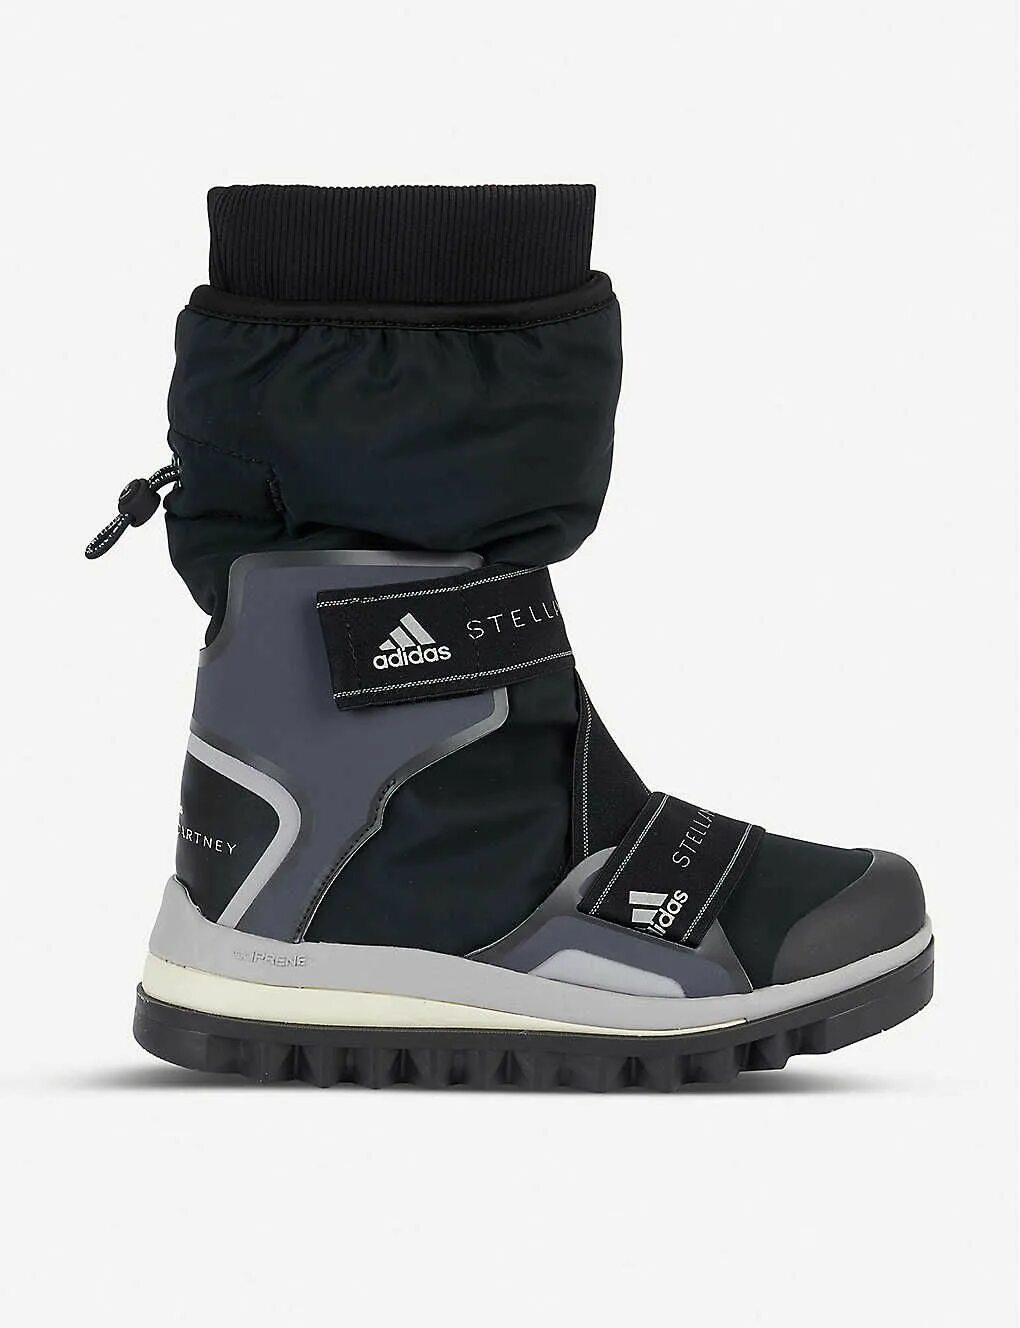 Купить g r. Adidas Stella MCCARTNEY Snow Boots. Adidas by Stella MCCARTNEY зимние сапоги. Ботинки adidas Stella MCCARTNEY зиму мужские.